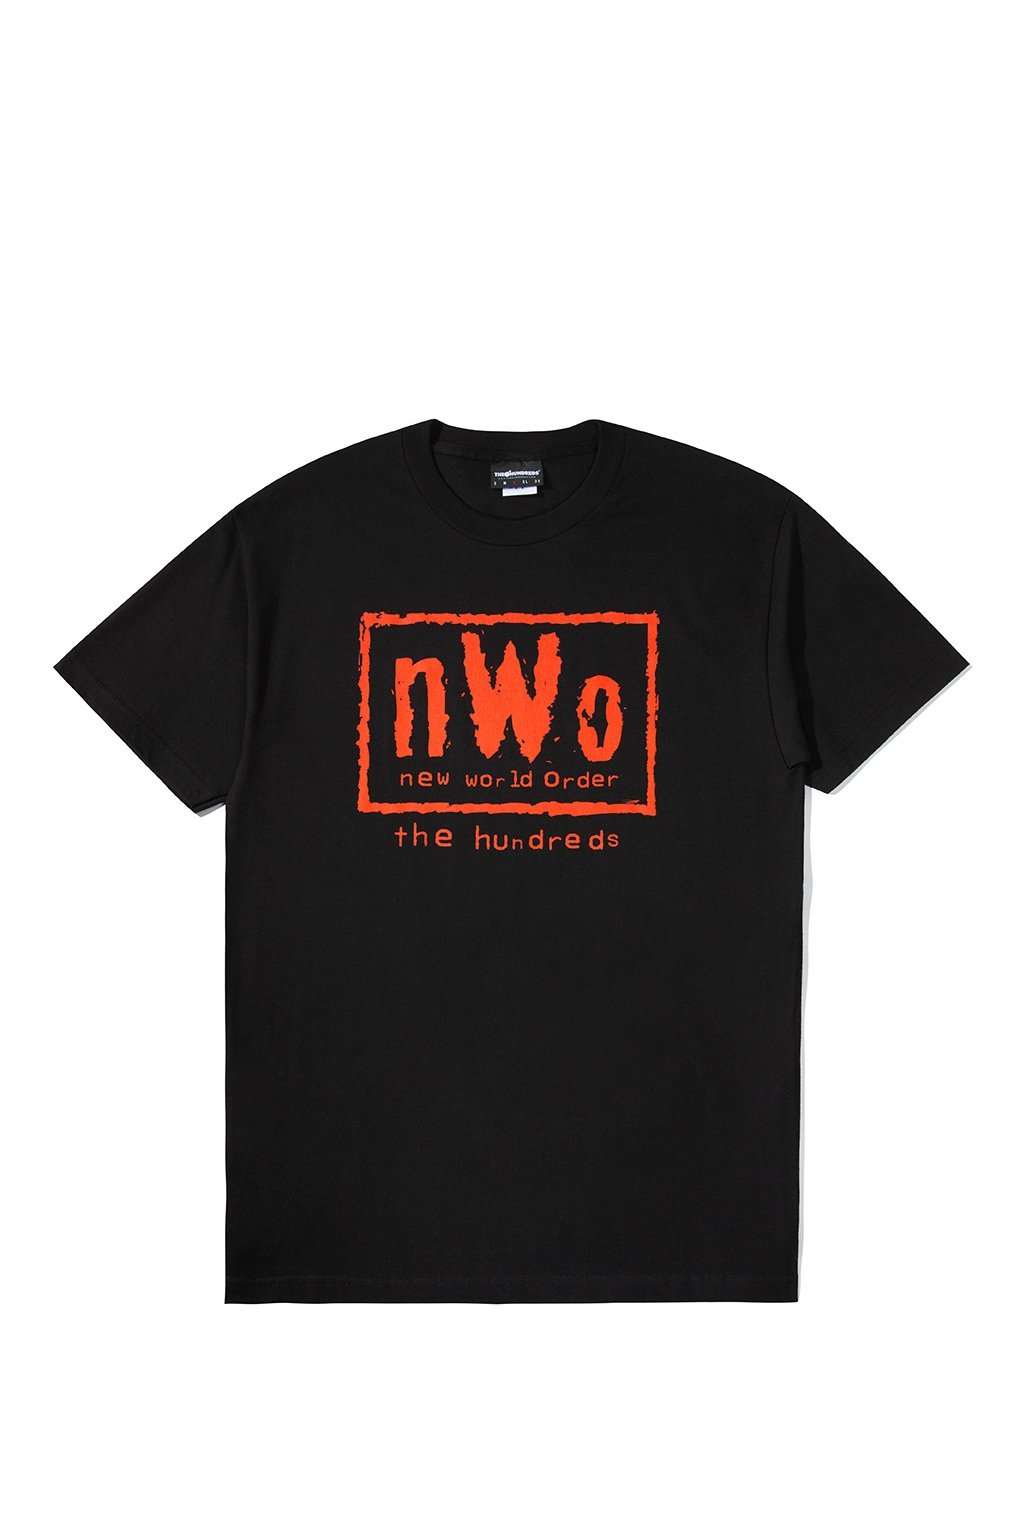 The Hundreds x WWE NWO T-Shirt Black Men's - FW19 - US